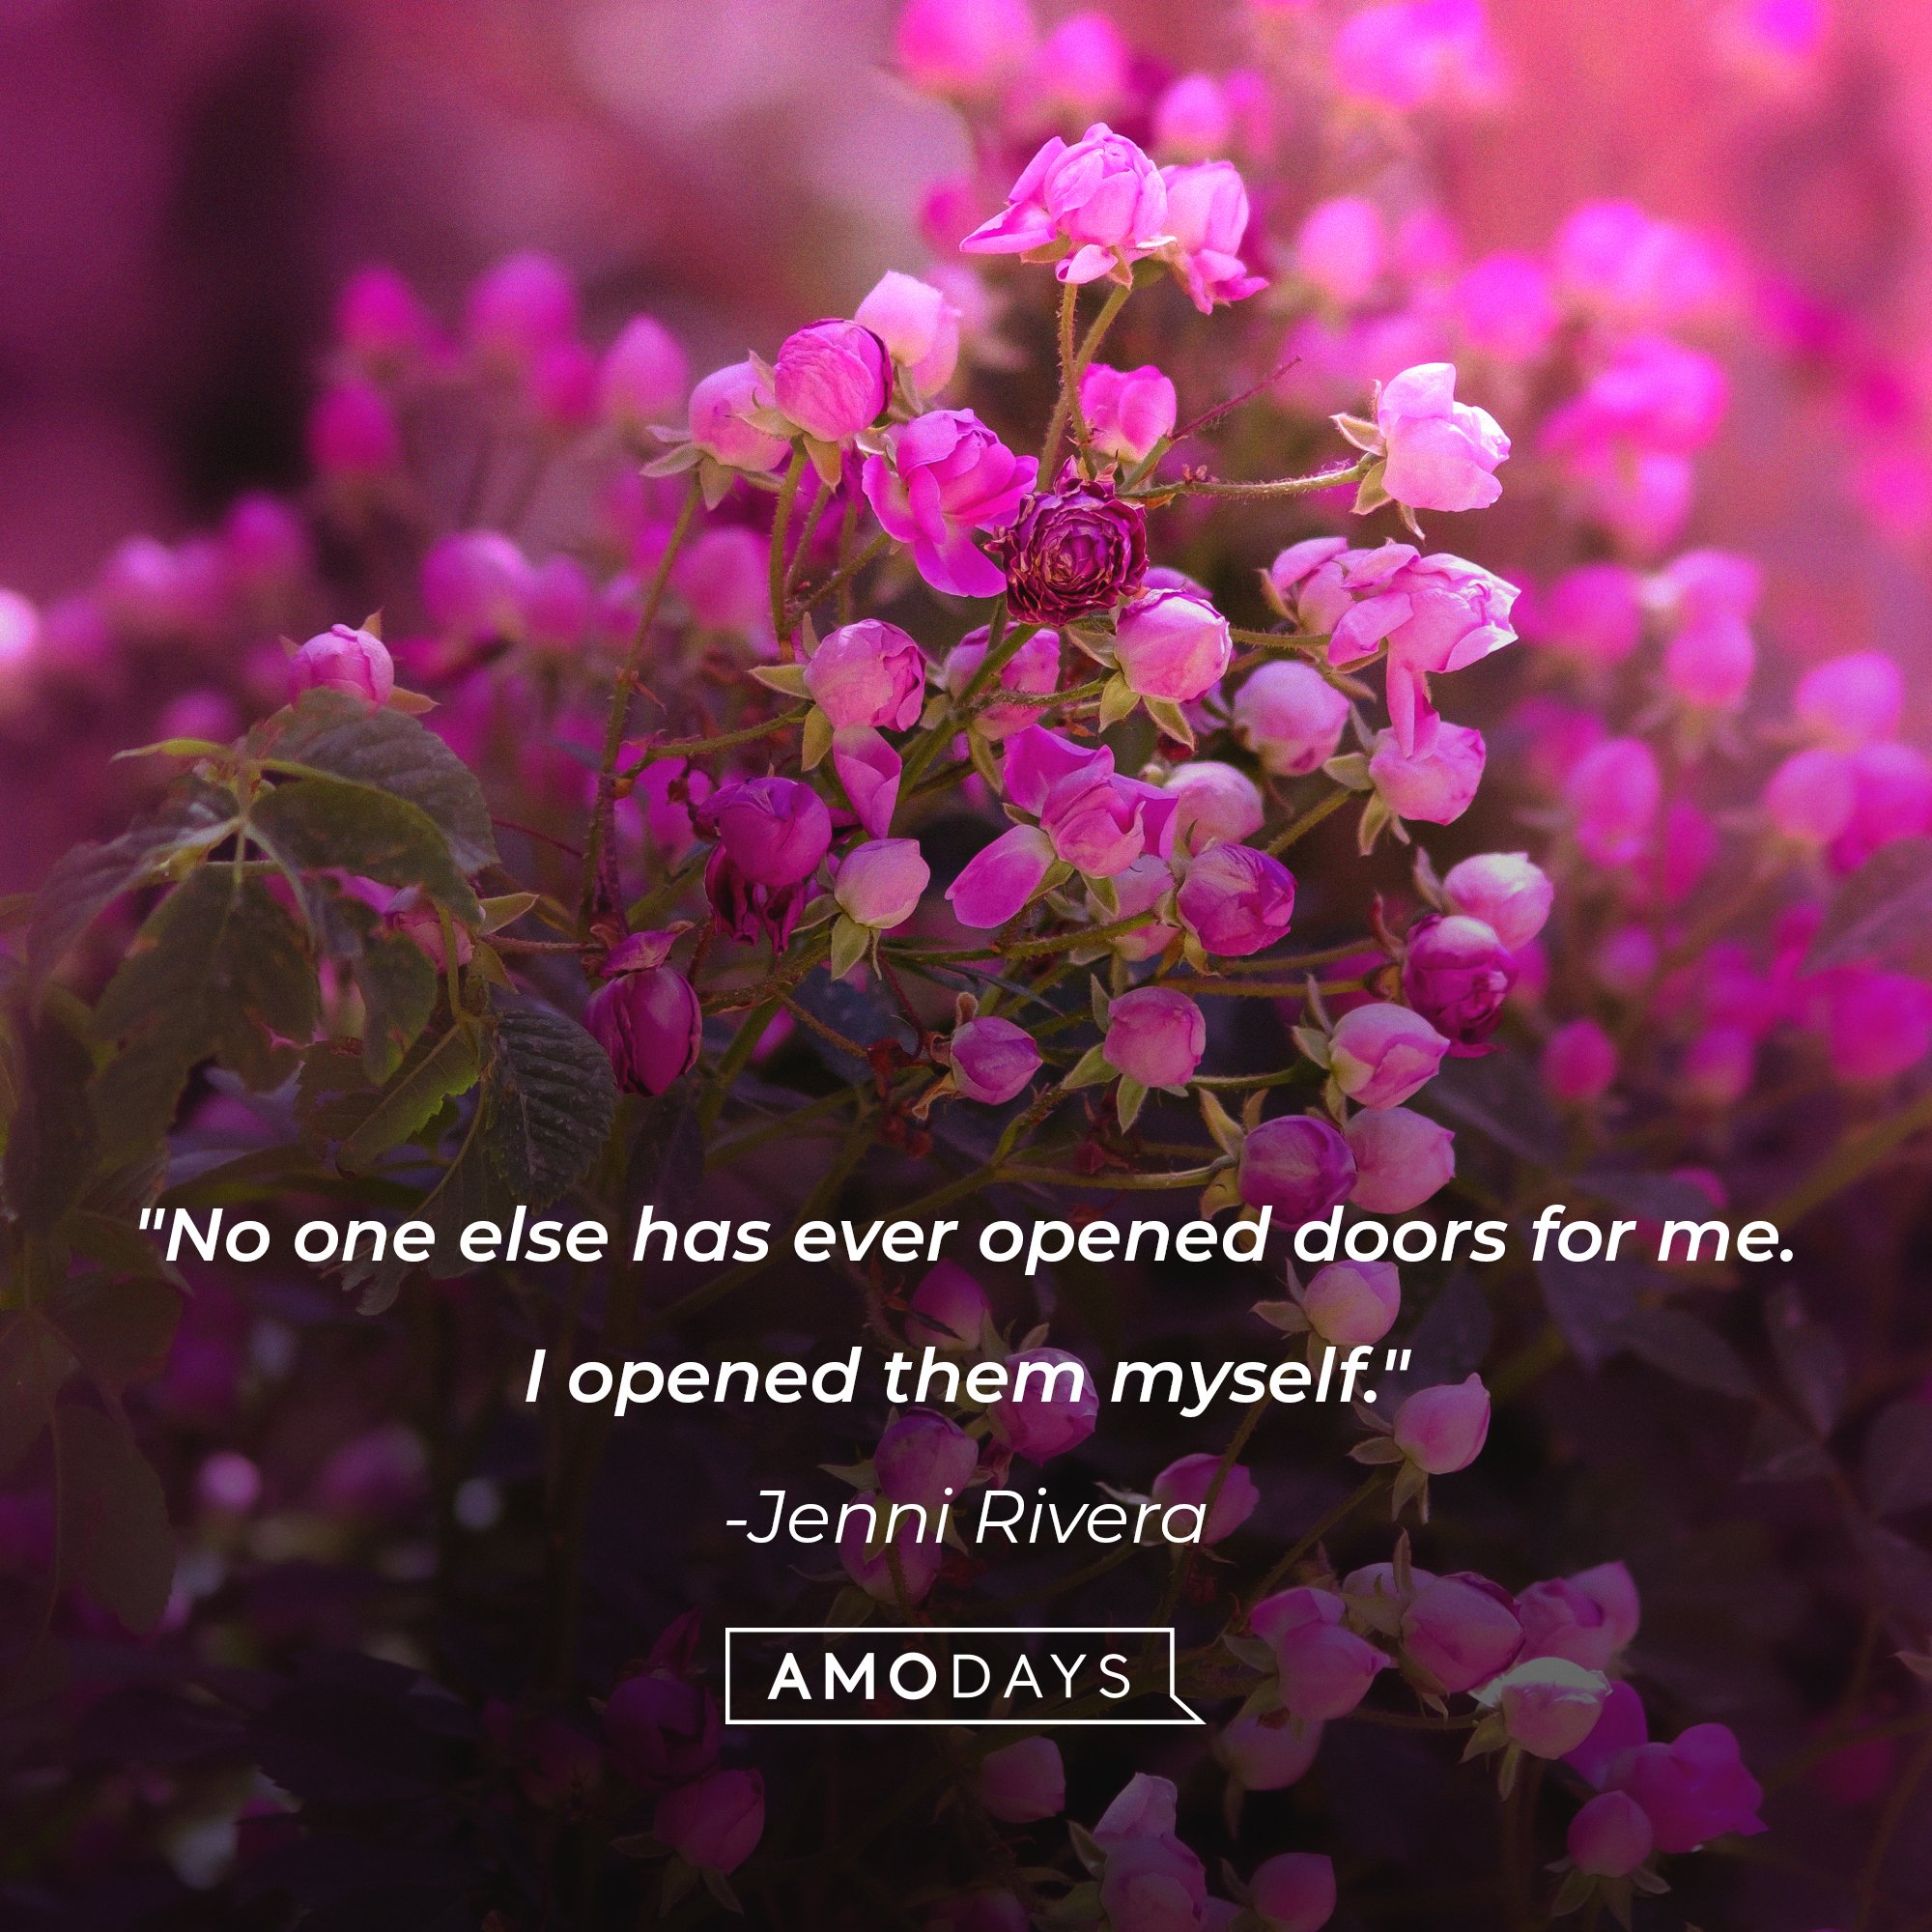 Jenni Rivera’s quote: "No one else has ever opened doors for me. I opened them myself." | Image: AmoDays